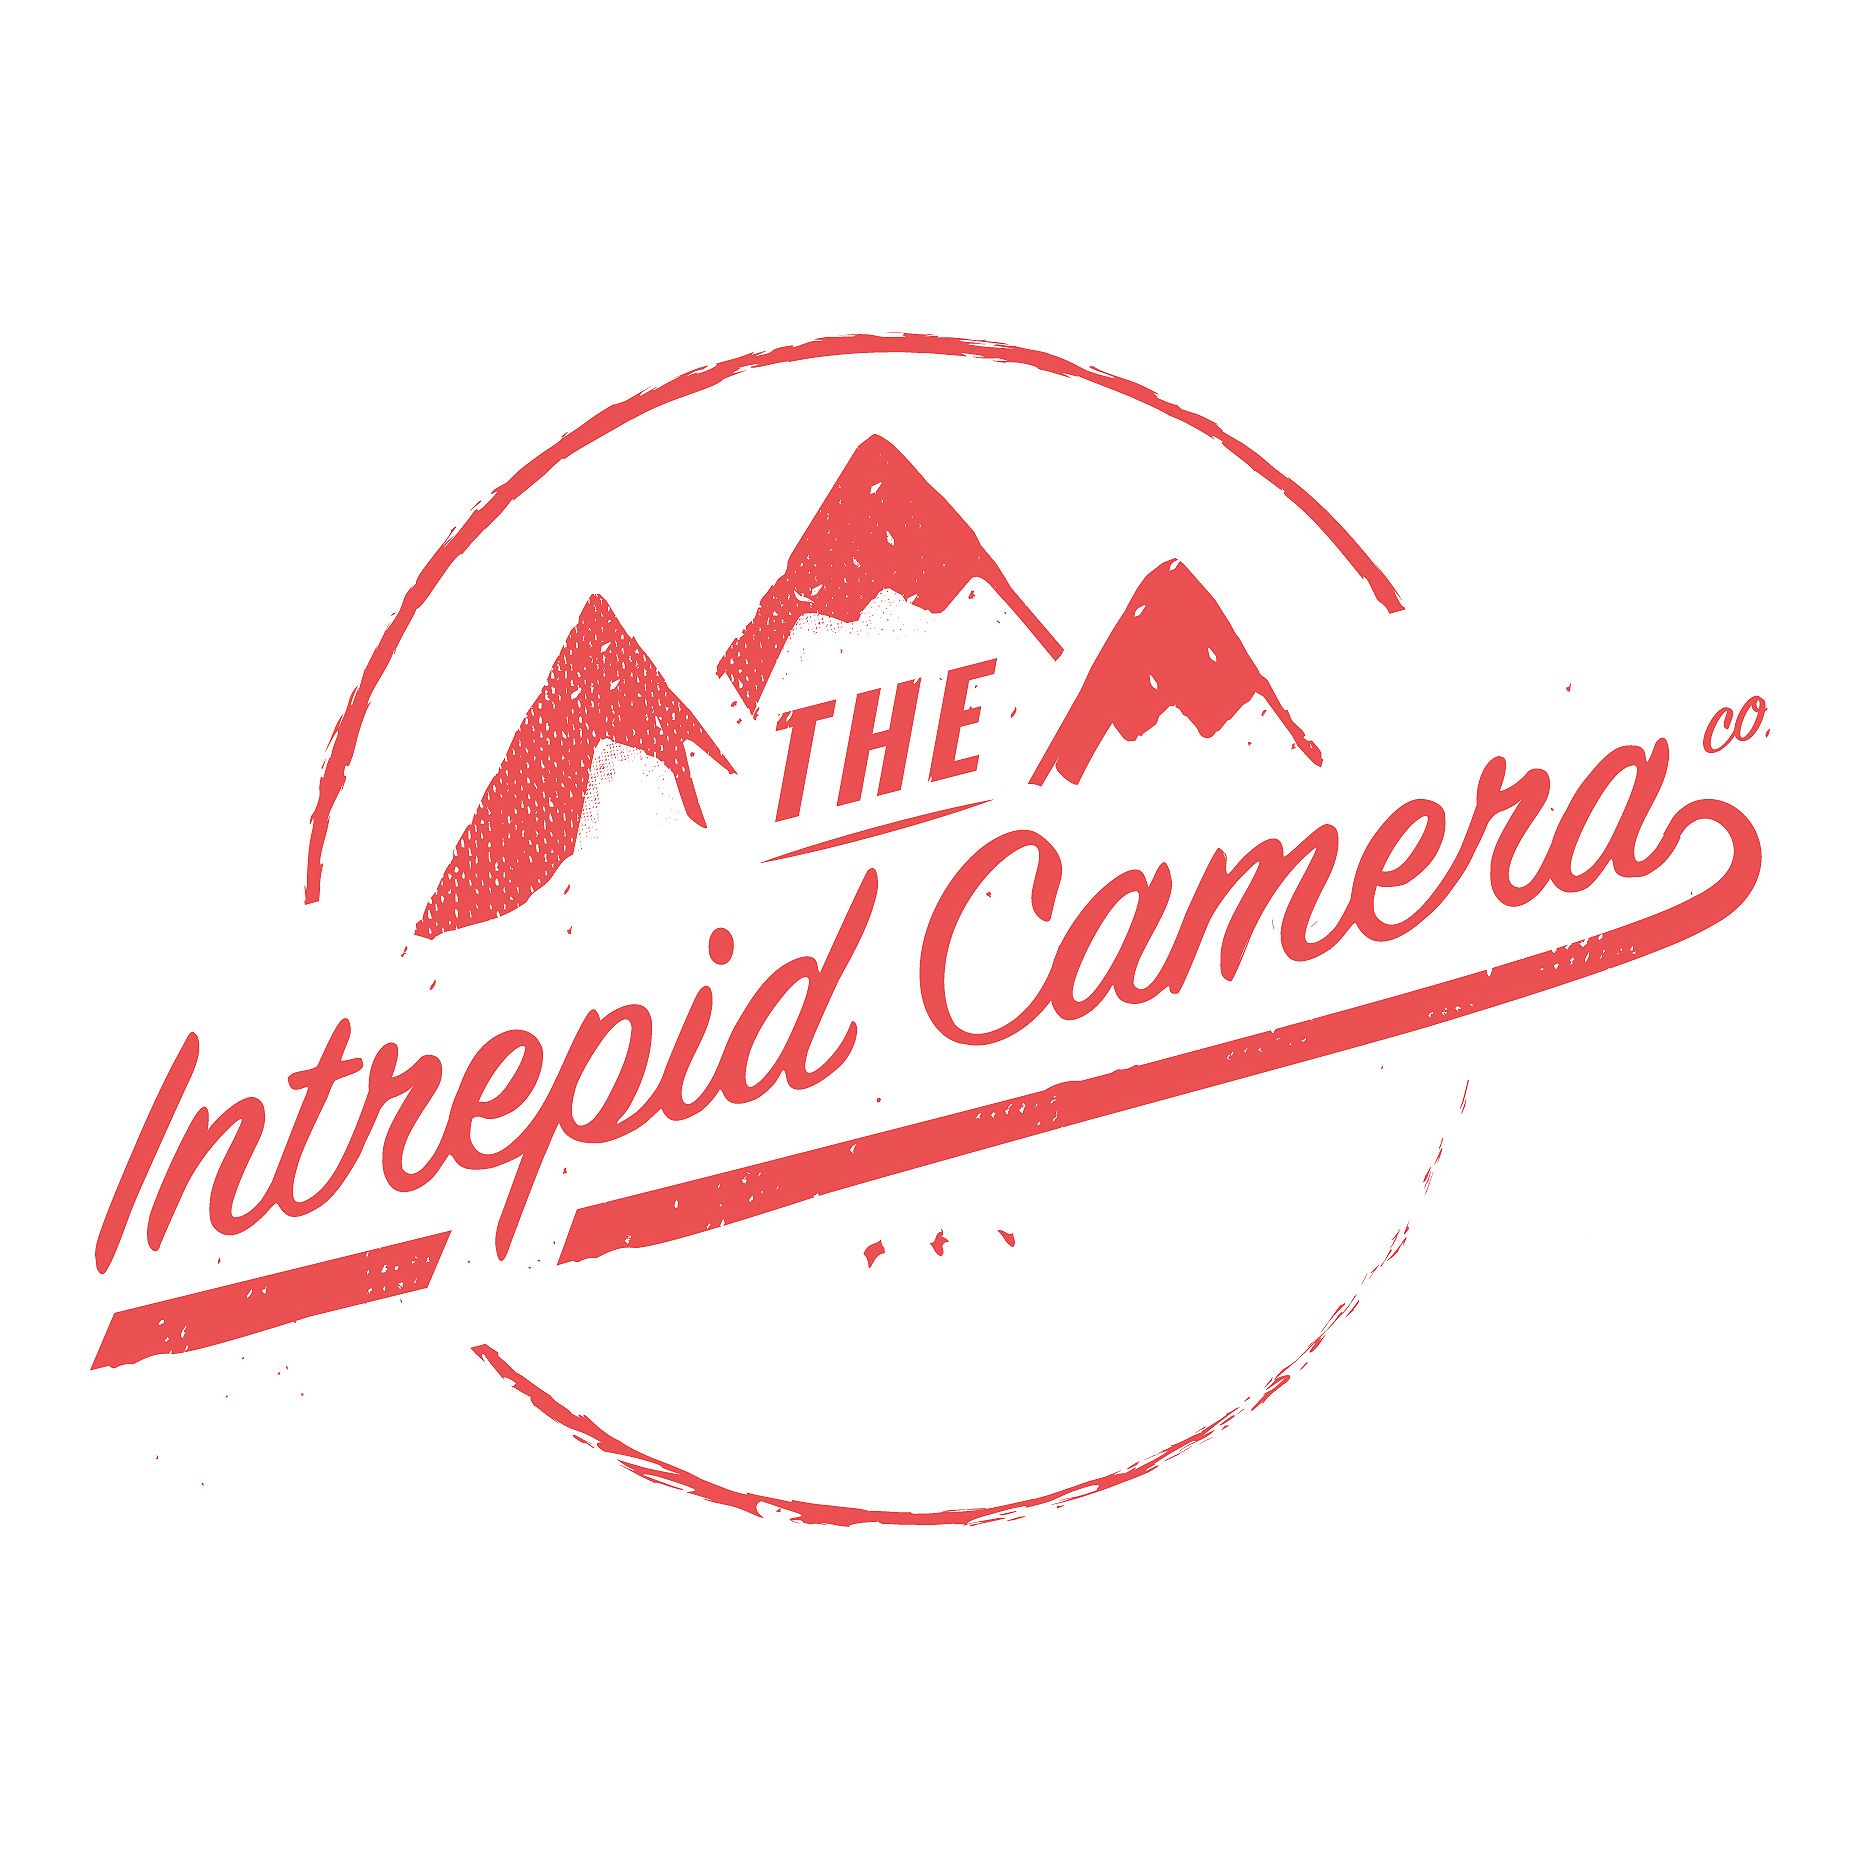 The Intrepid Camera Company